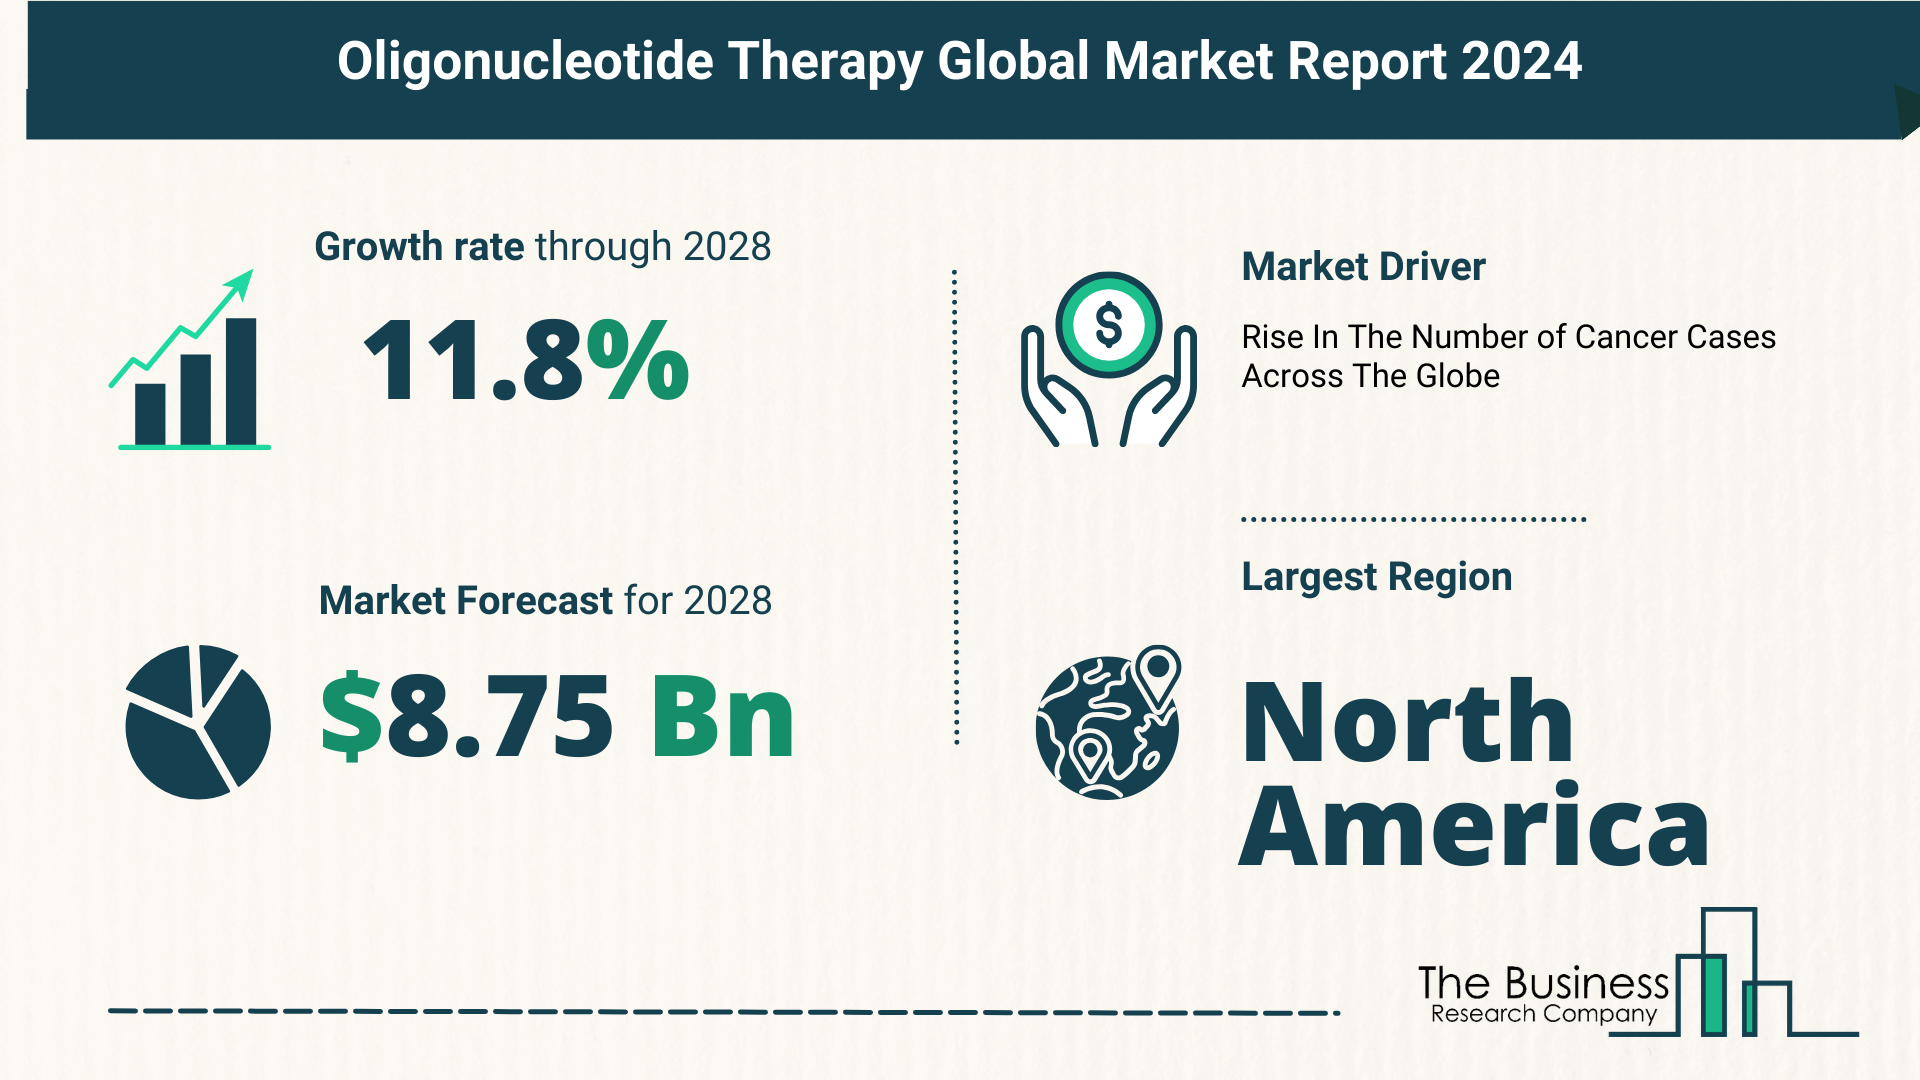 Key Takeaways From The Global Oligonucleotide Therapy Market Forecast 2024